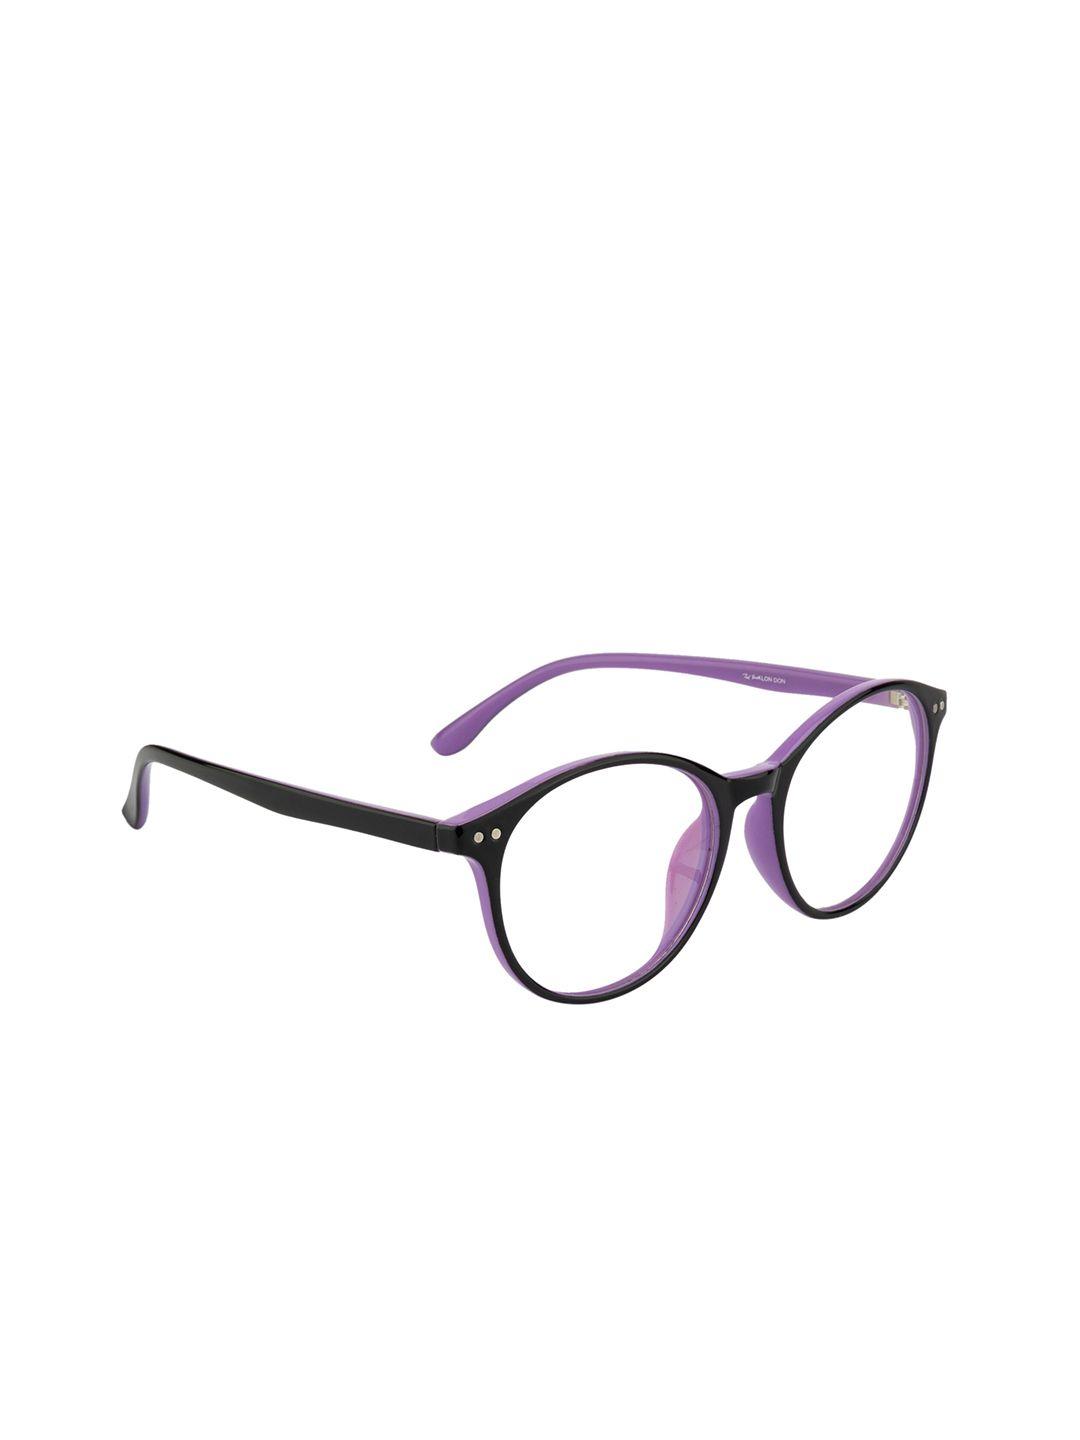 ted smith unisex purple & black full rim round frames eyeglasses